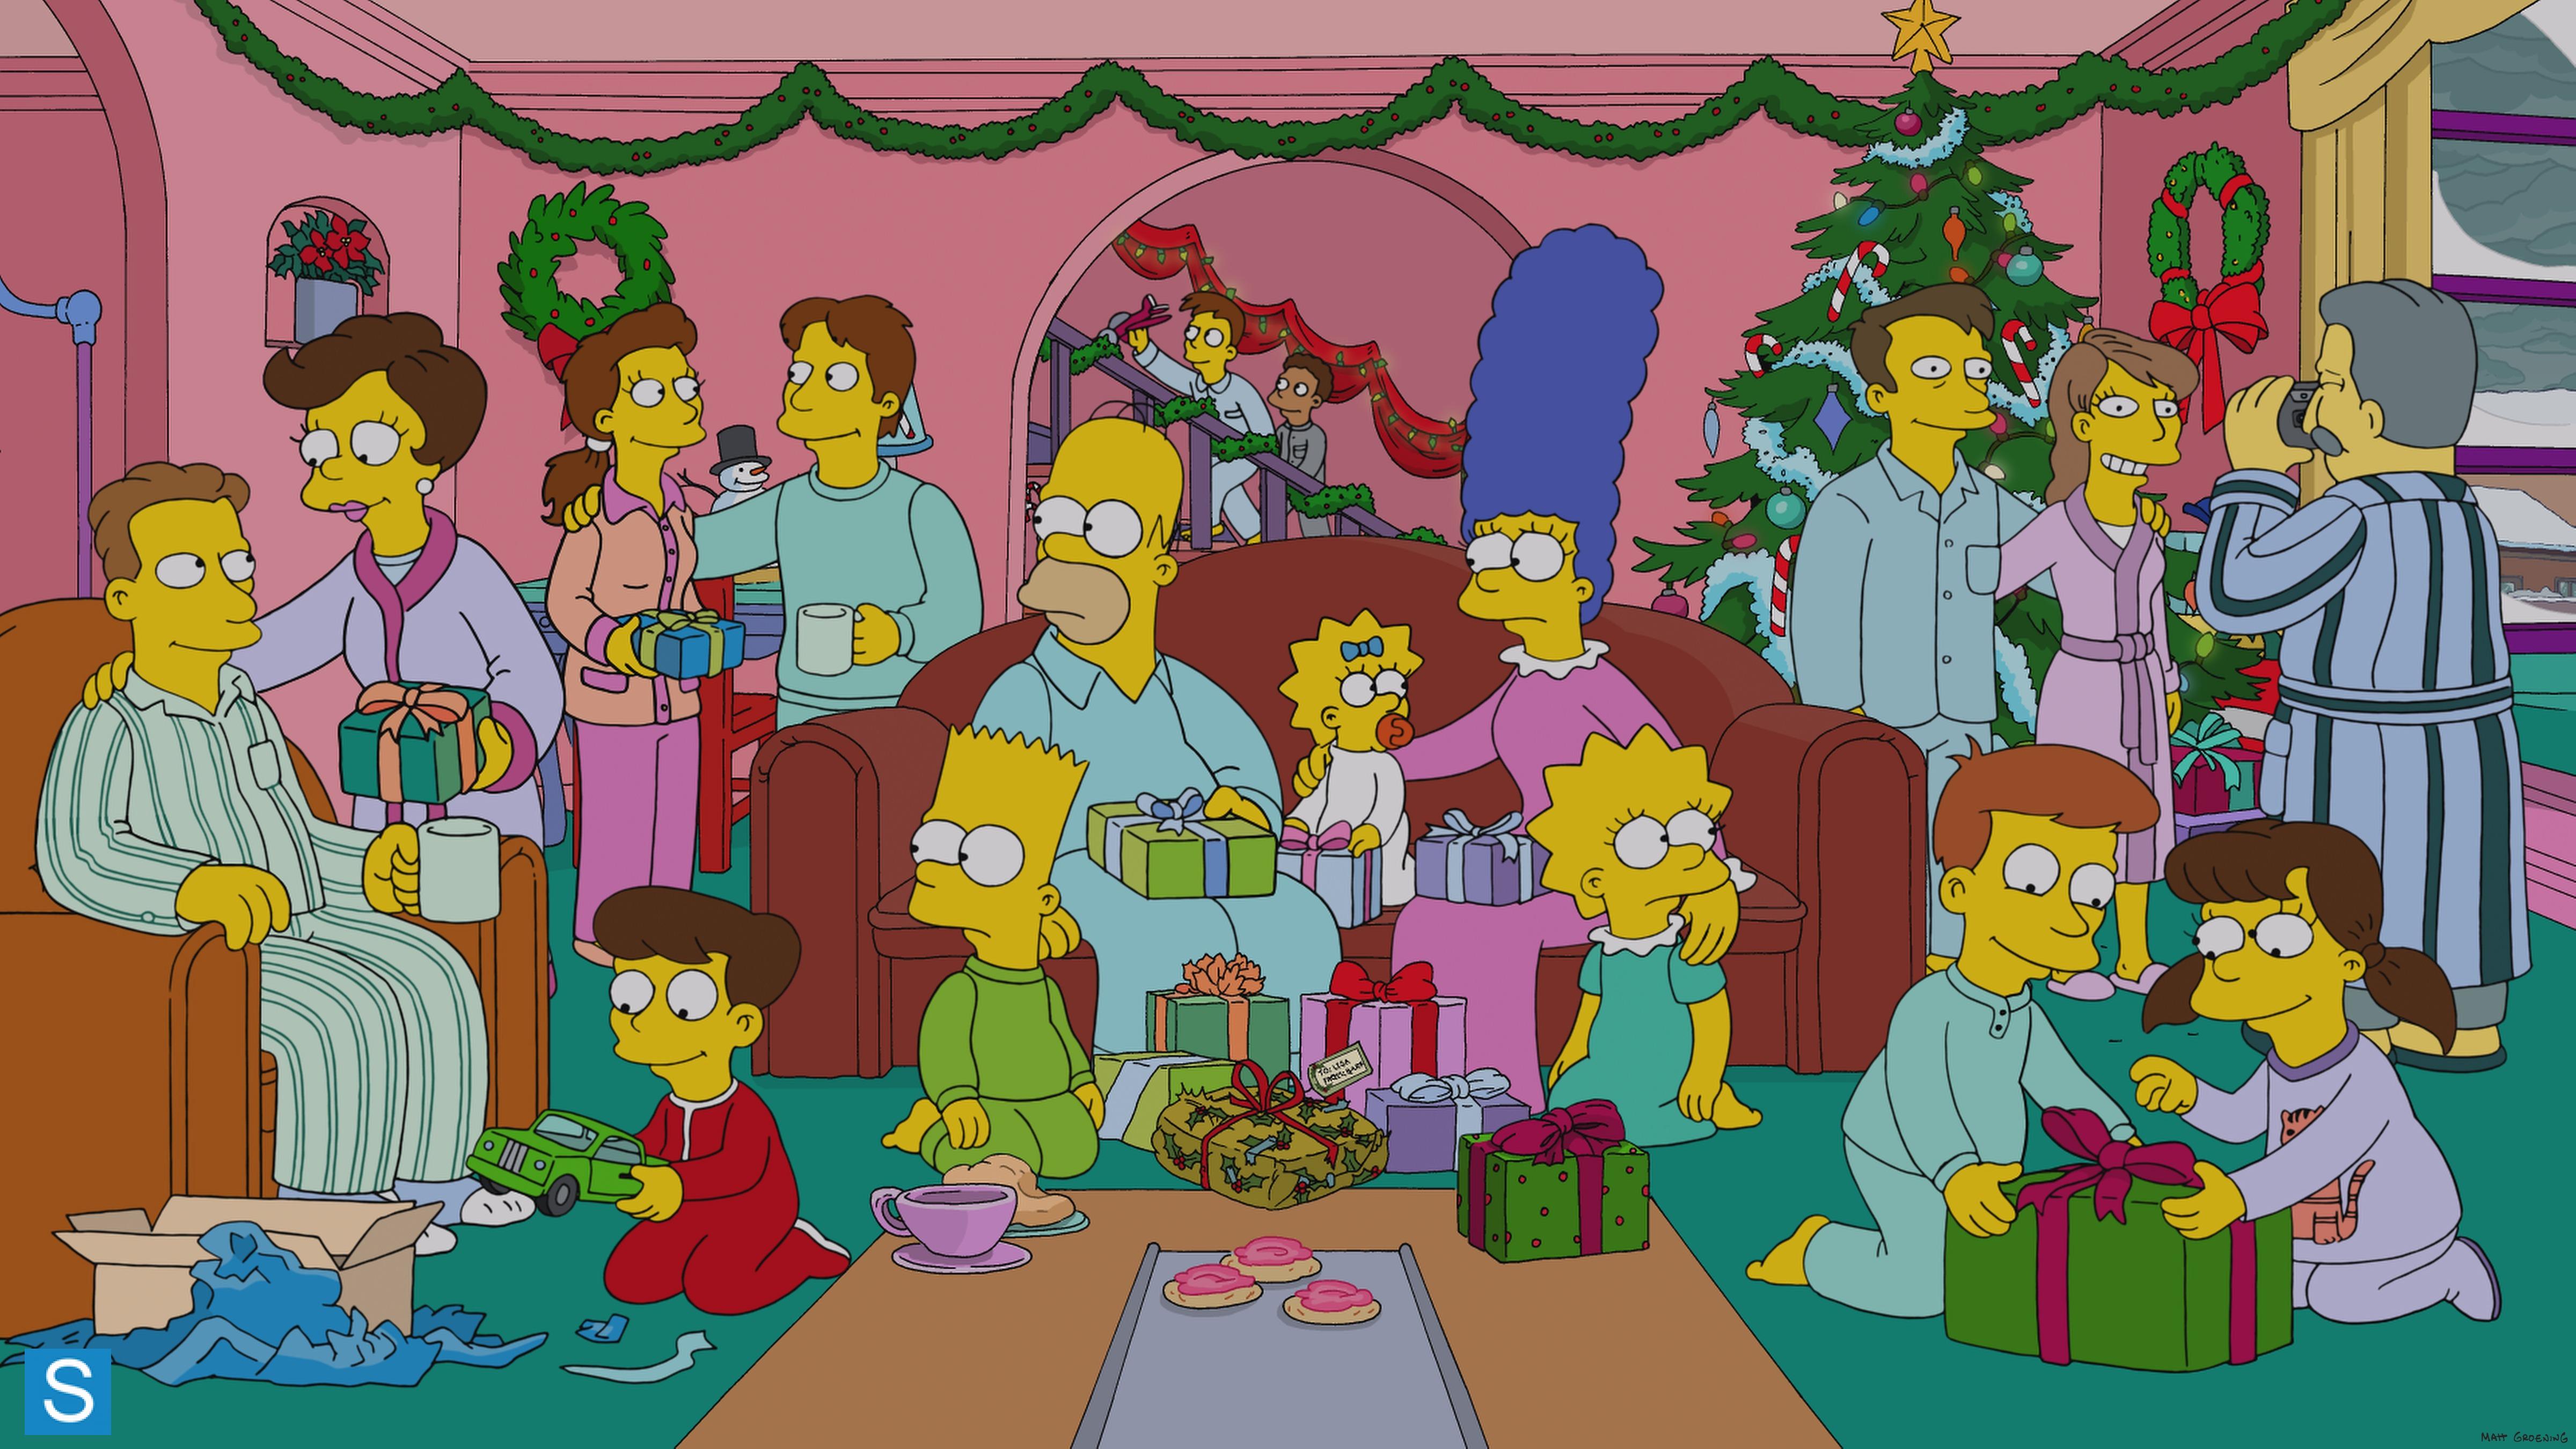 Simpsons Christmas f JPG wallpaper 4800x2700 184455 WallpaperUP